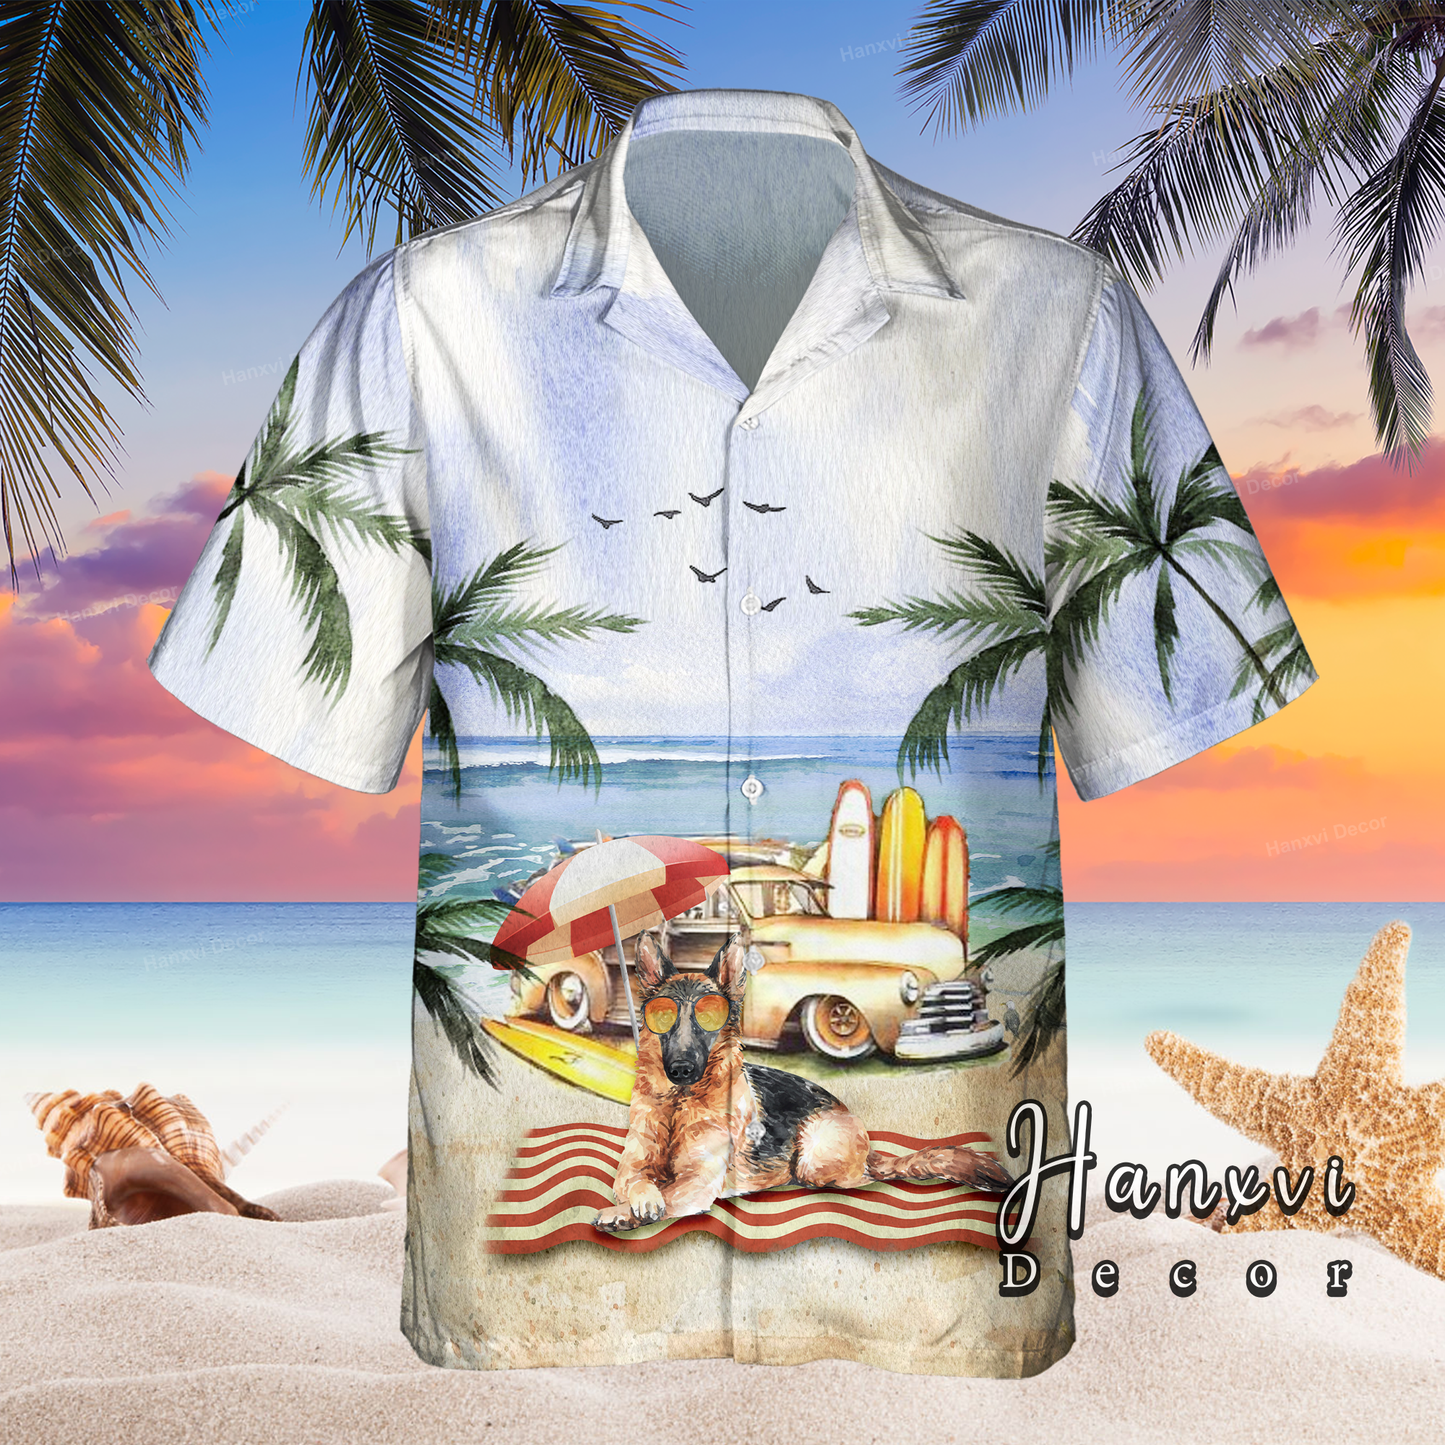 German Shepherd Beach Club Hawaiian Shirt